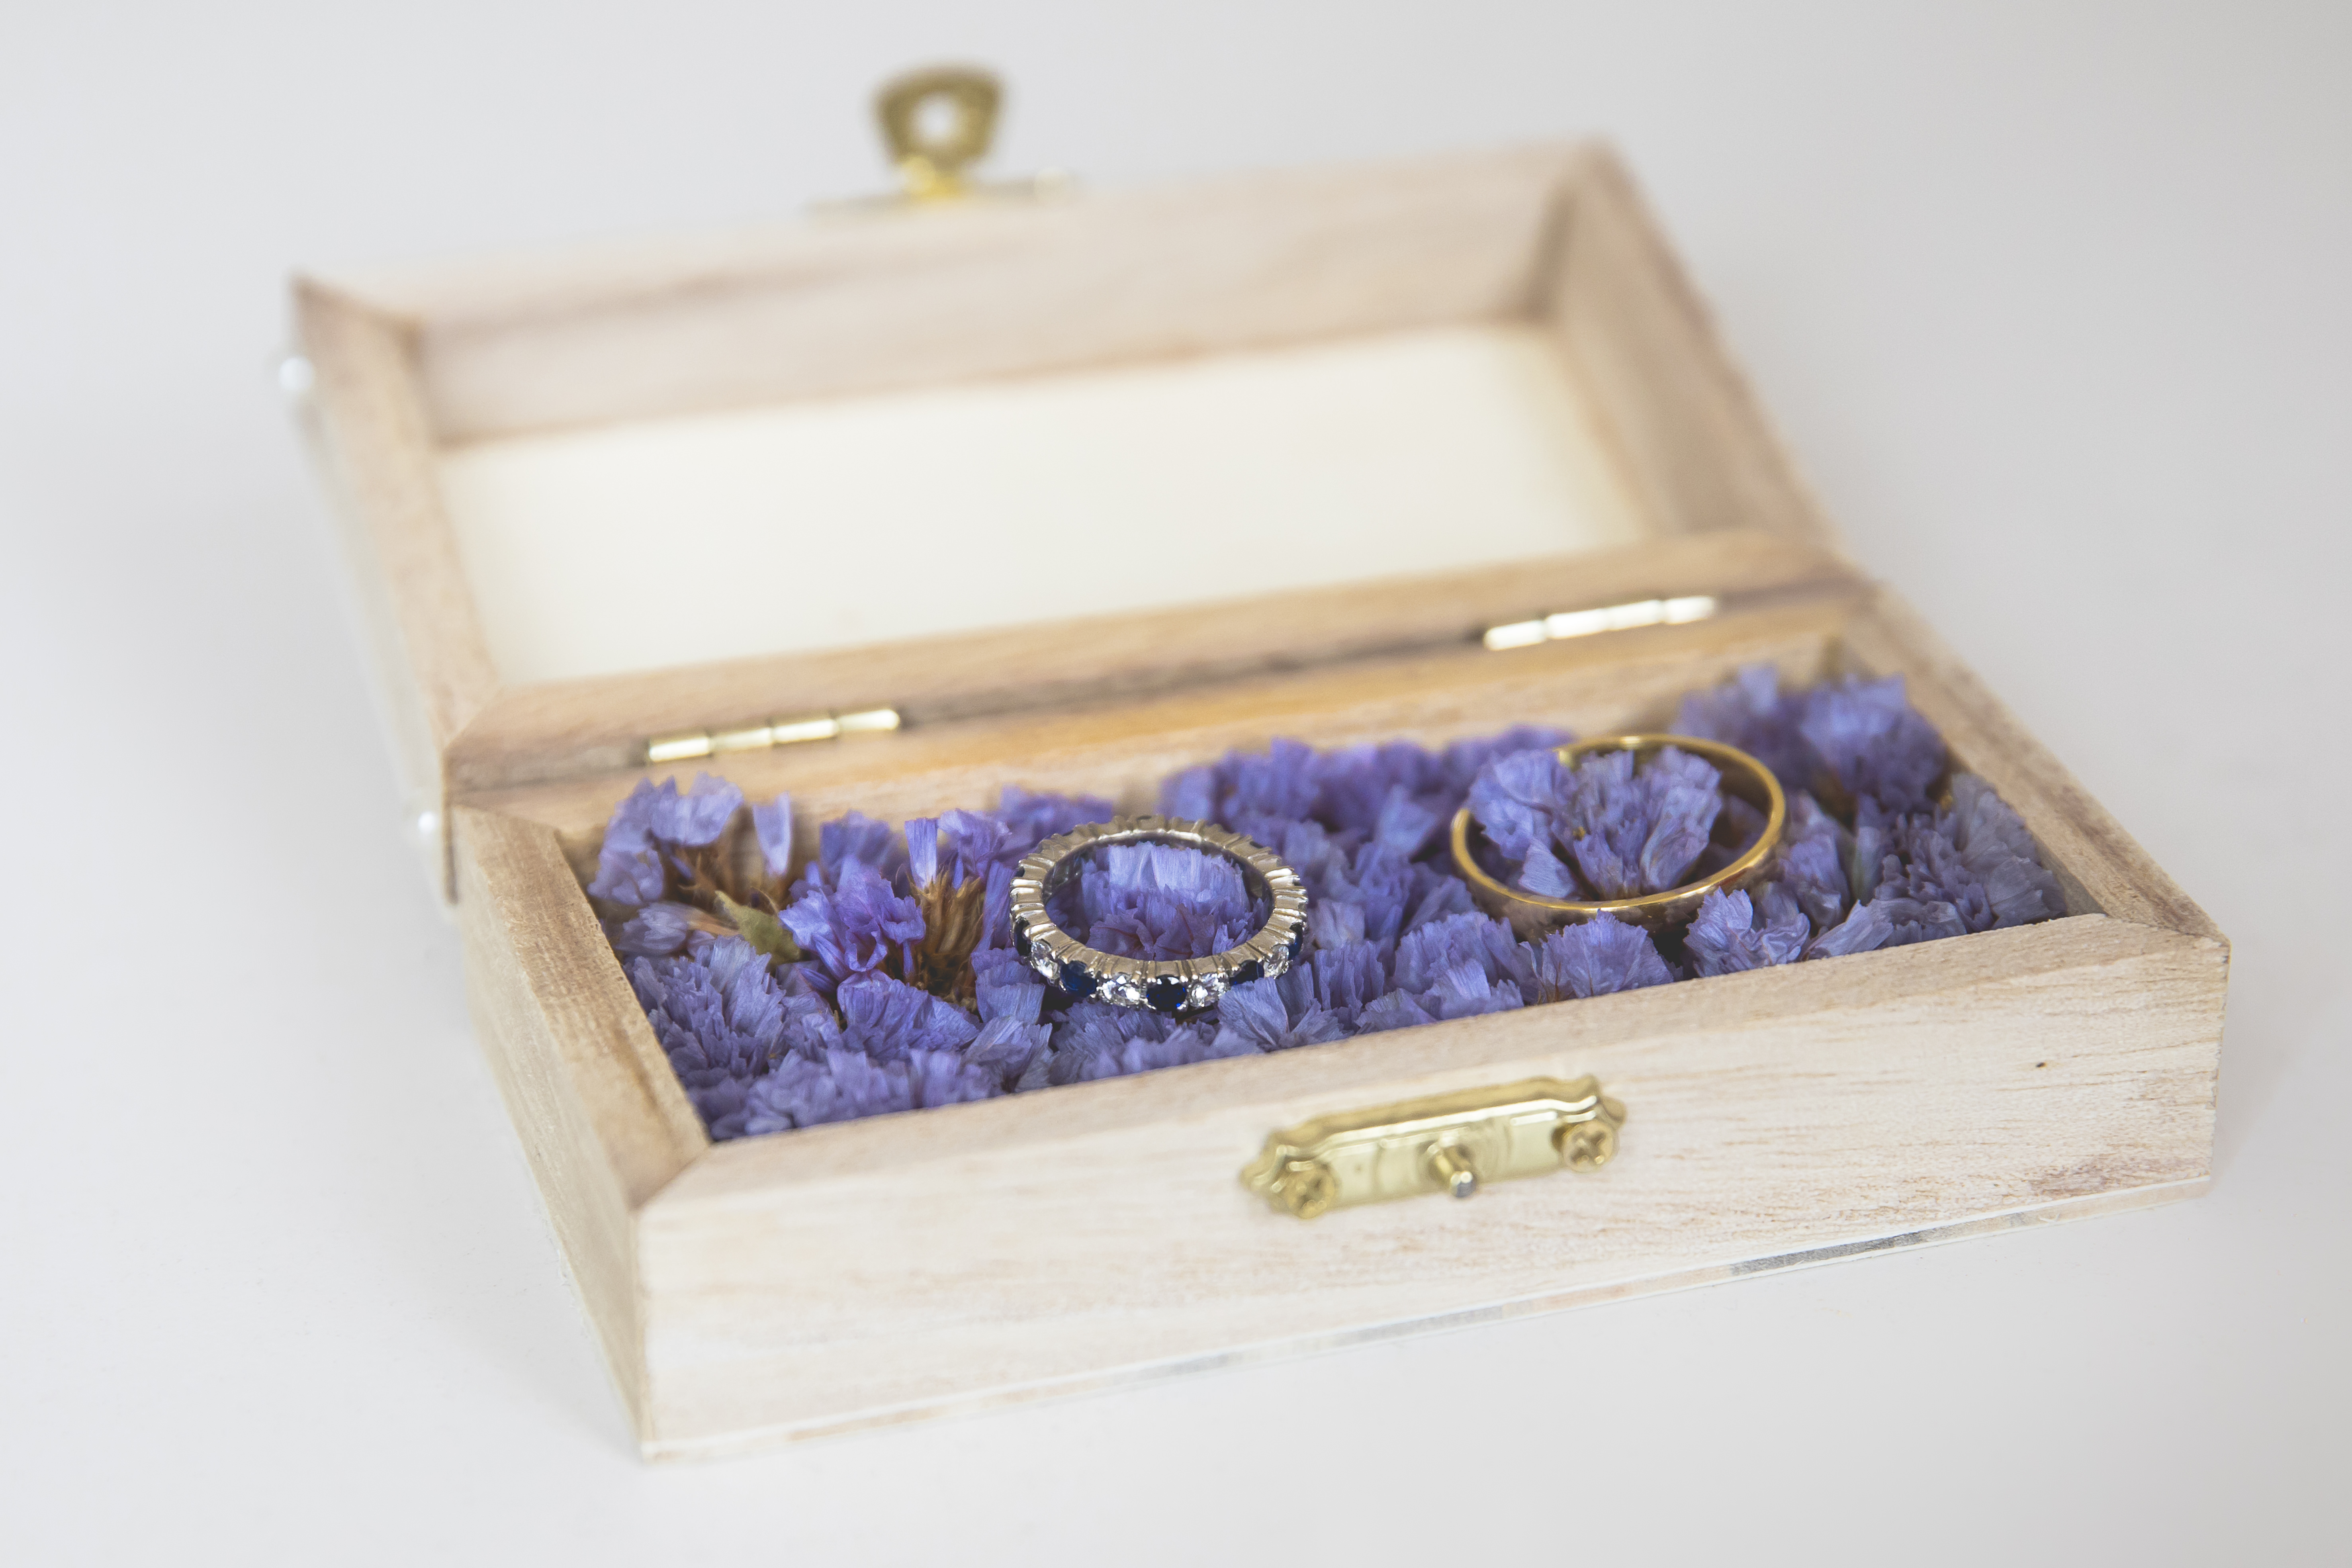 vecteezy_wedding-rings-in-a-little-wooden-box-presented-on-purple-flowers_1428281.jpg